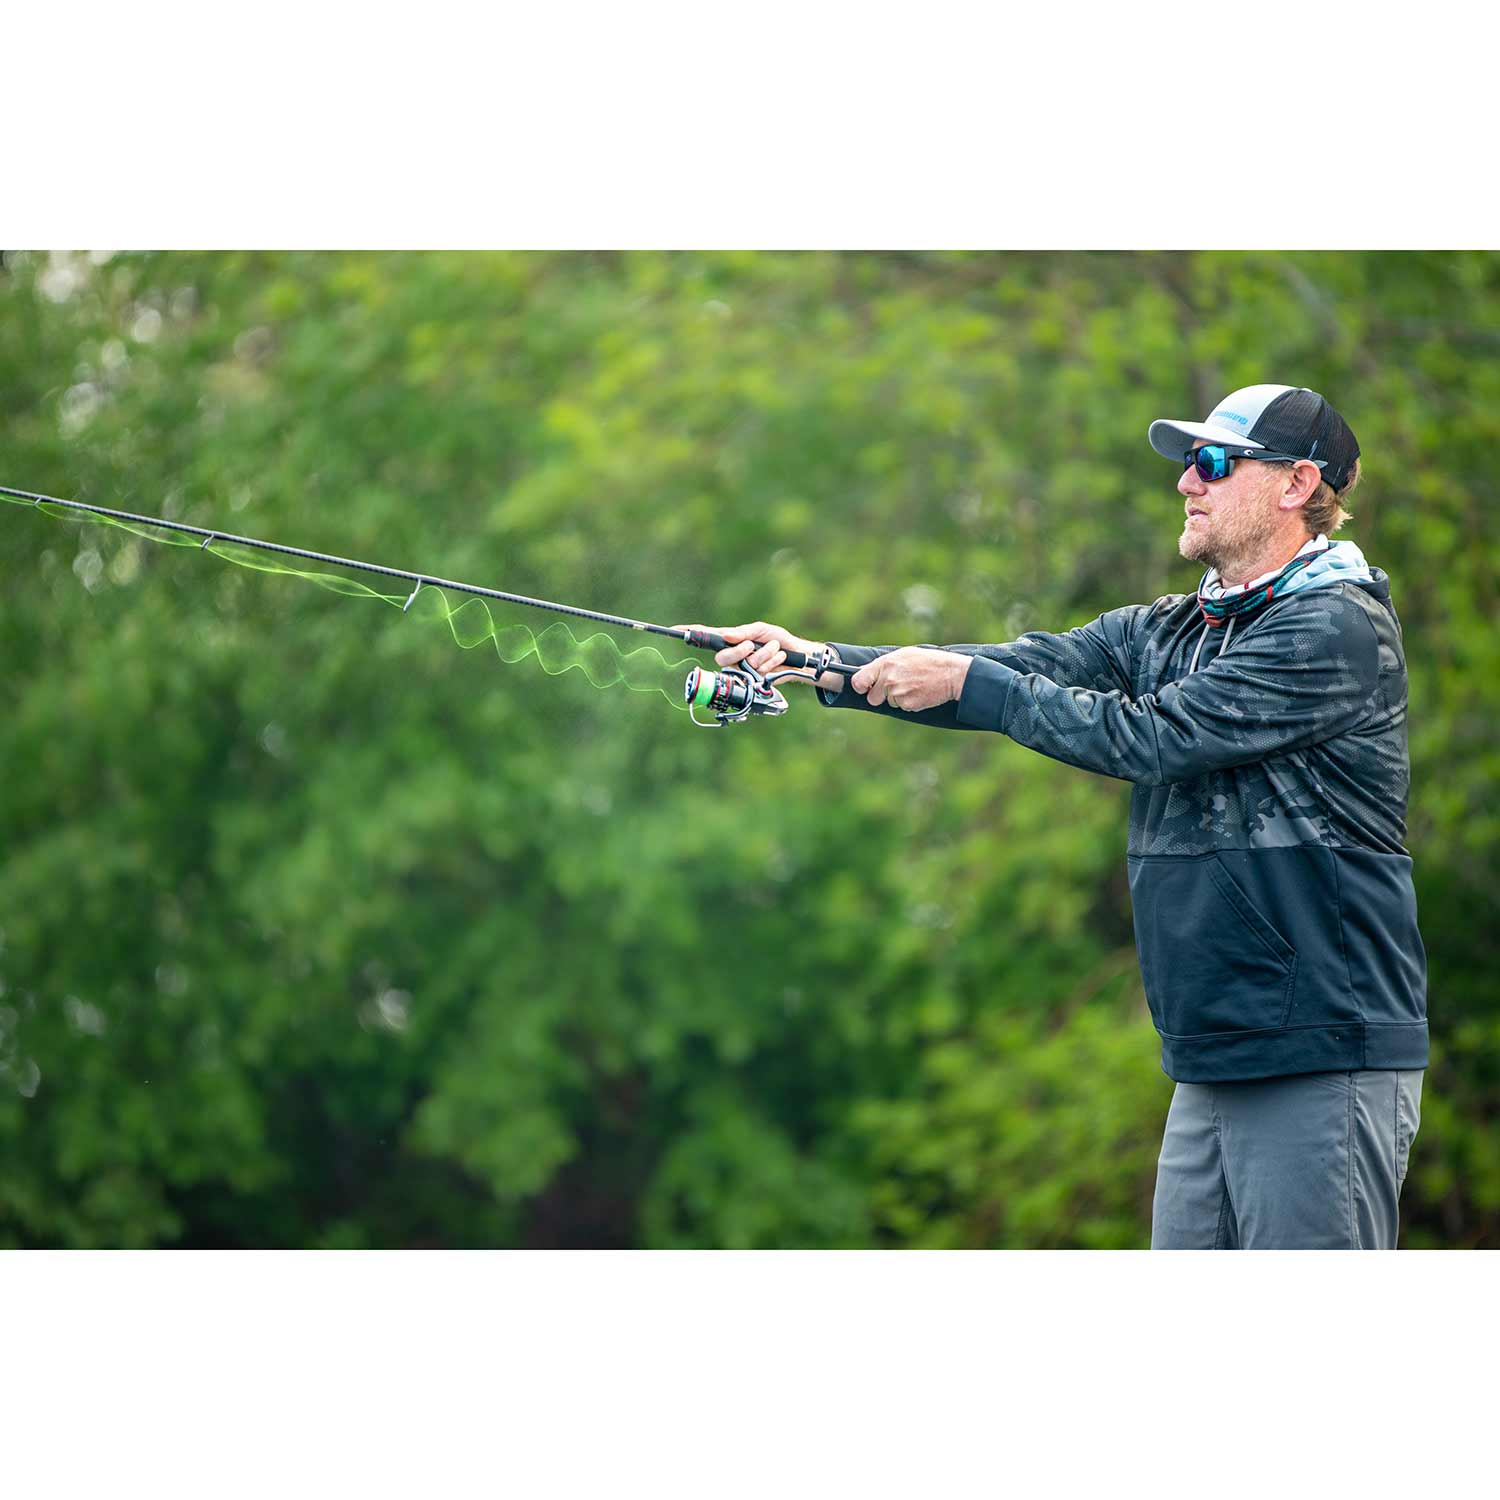 Shimano VFC3000XGF Fishing Vanford C3000Xg F Spinning Reel – VIPOutlet